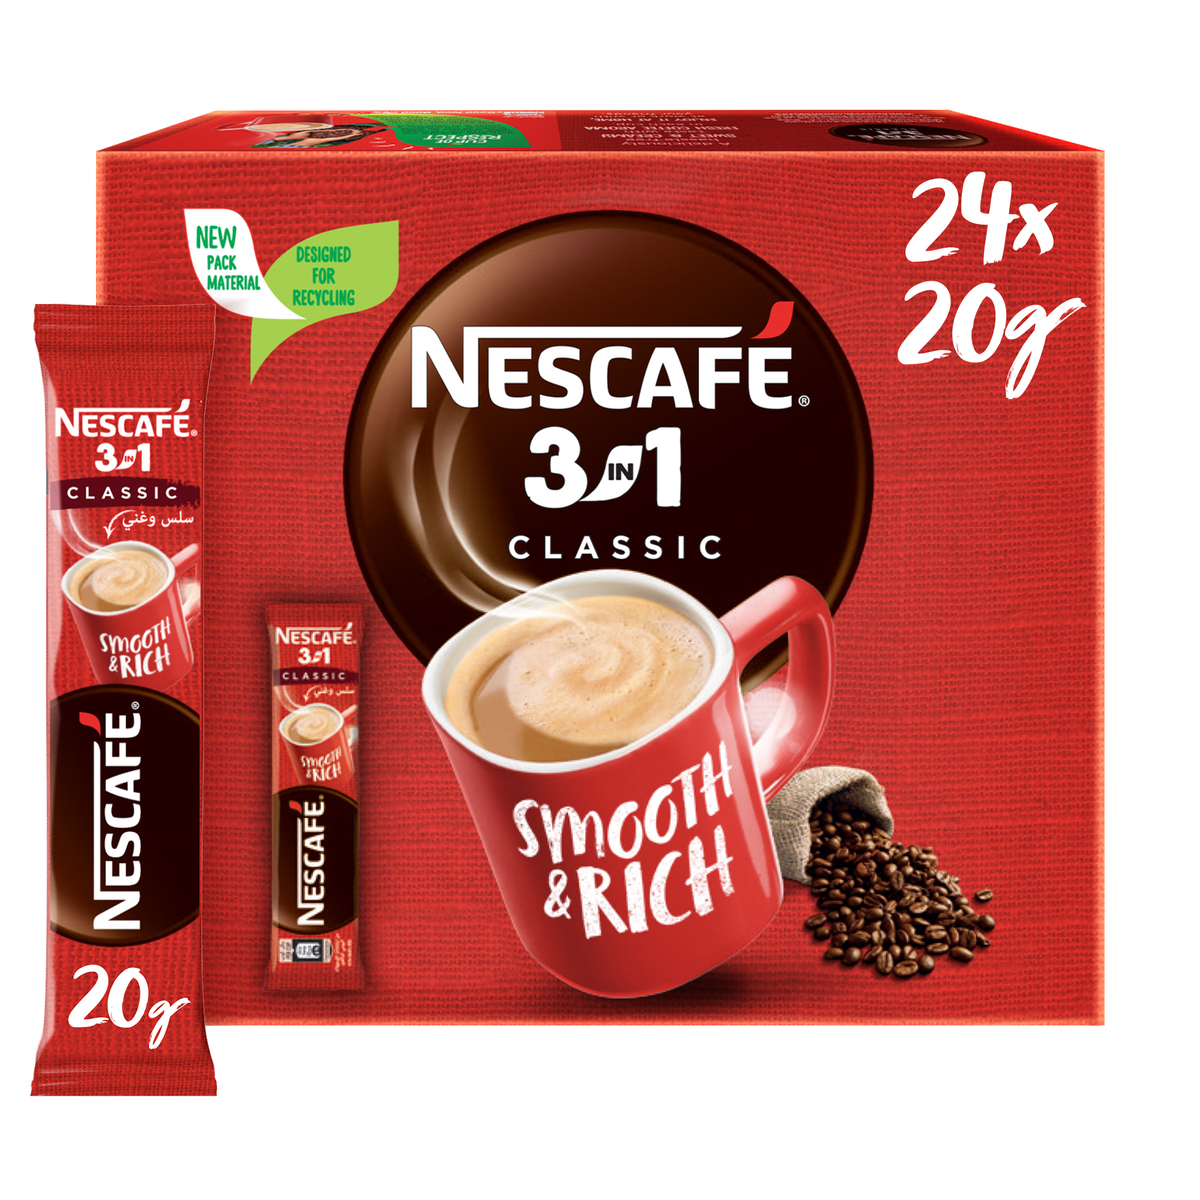 Nescafe 3 in 1 Instant Coffee - Original